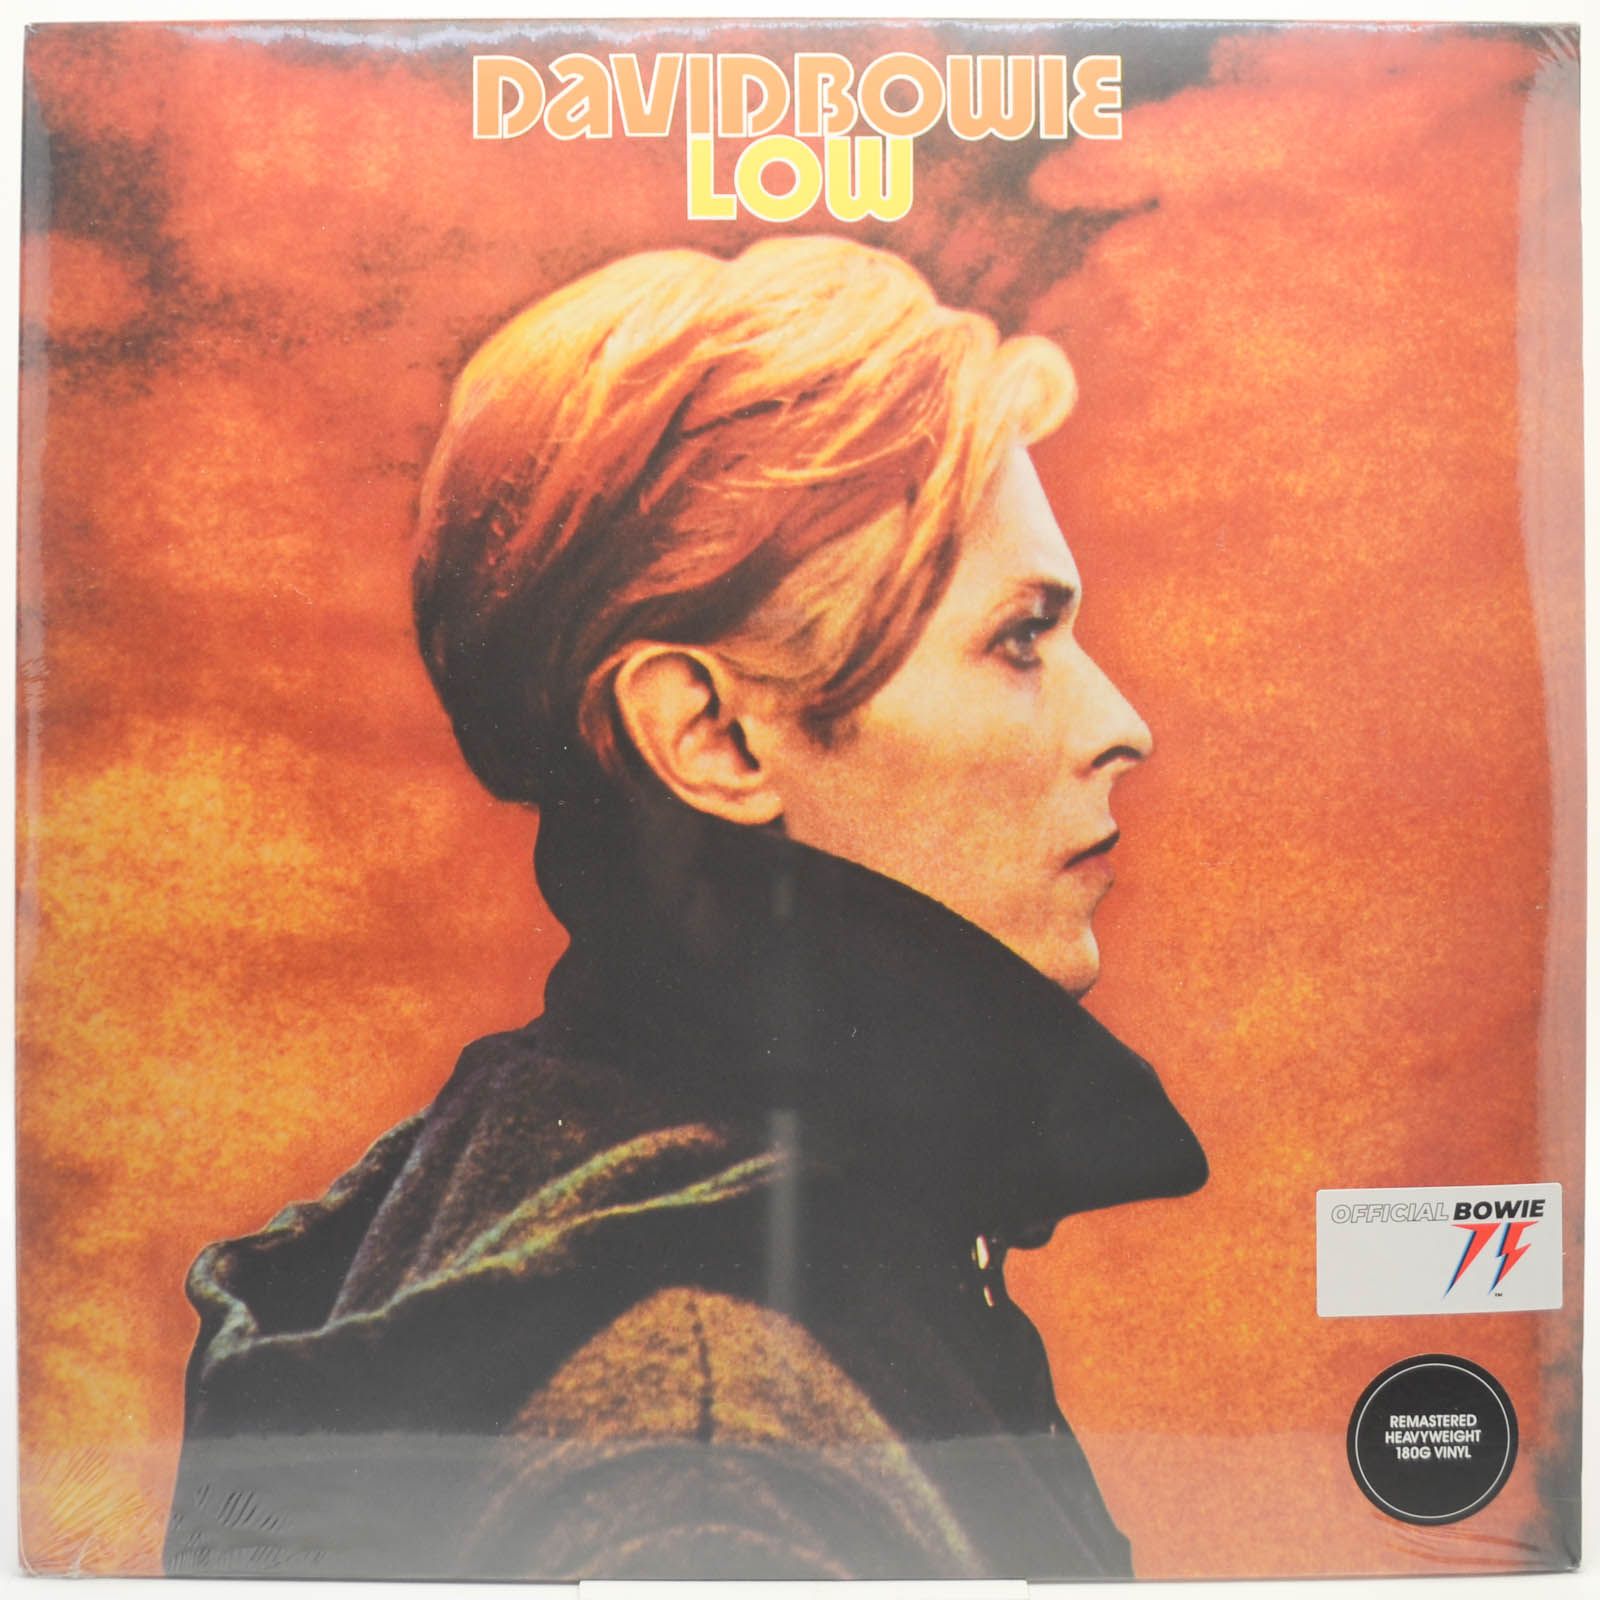 David Bowie — Low, 1977